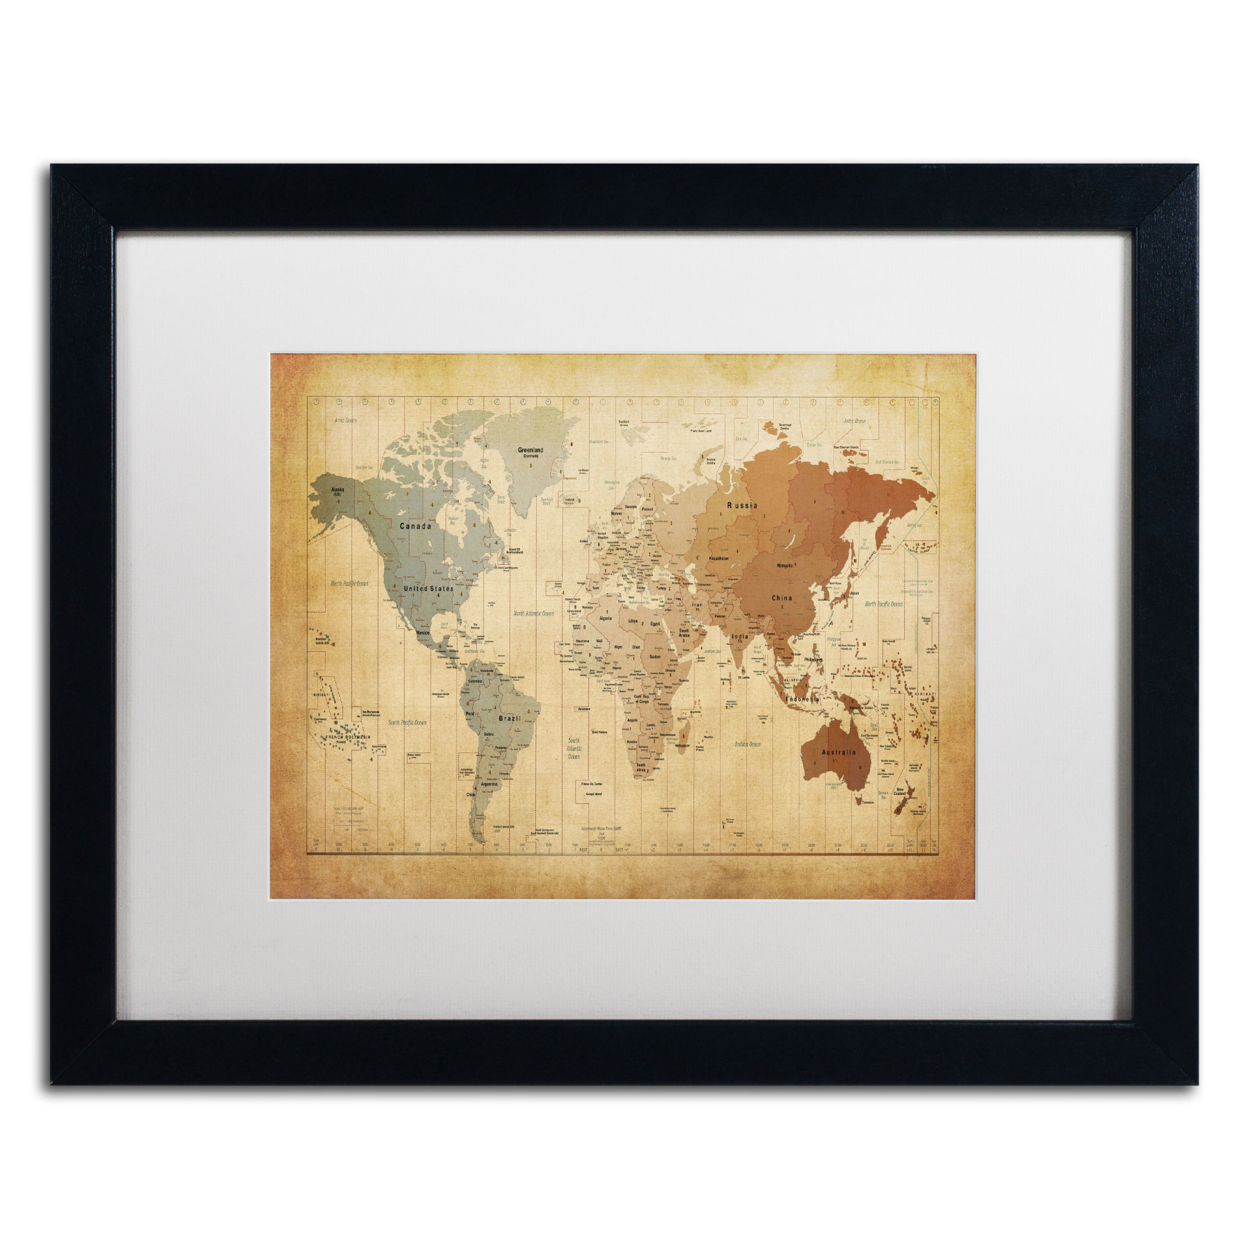 Michael Tompsett 'Time Zones Map Of The World' Black Wooden Framed Art 18 X 22 Inches